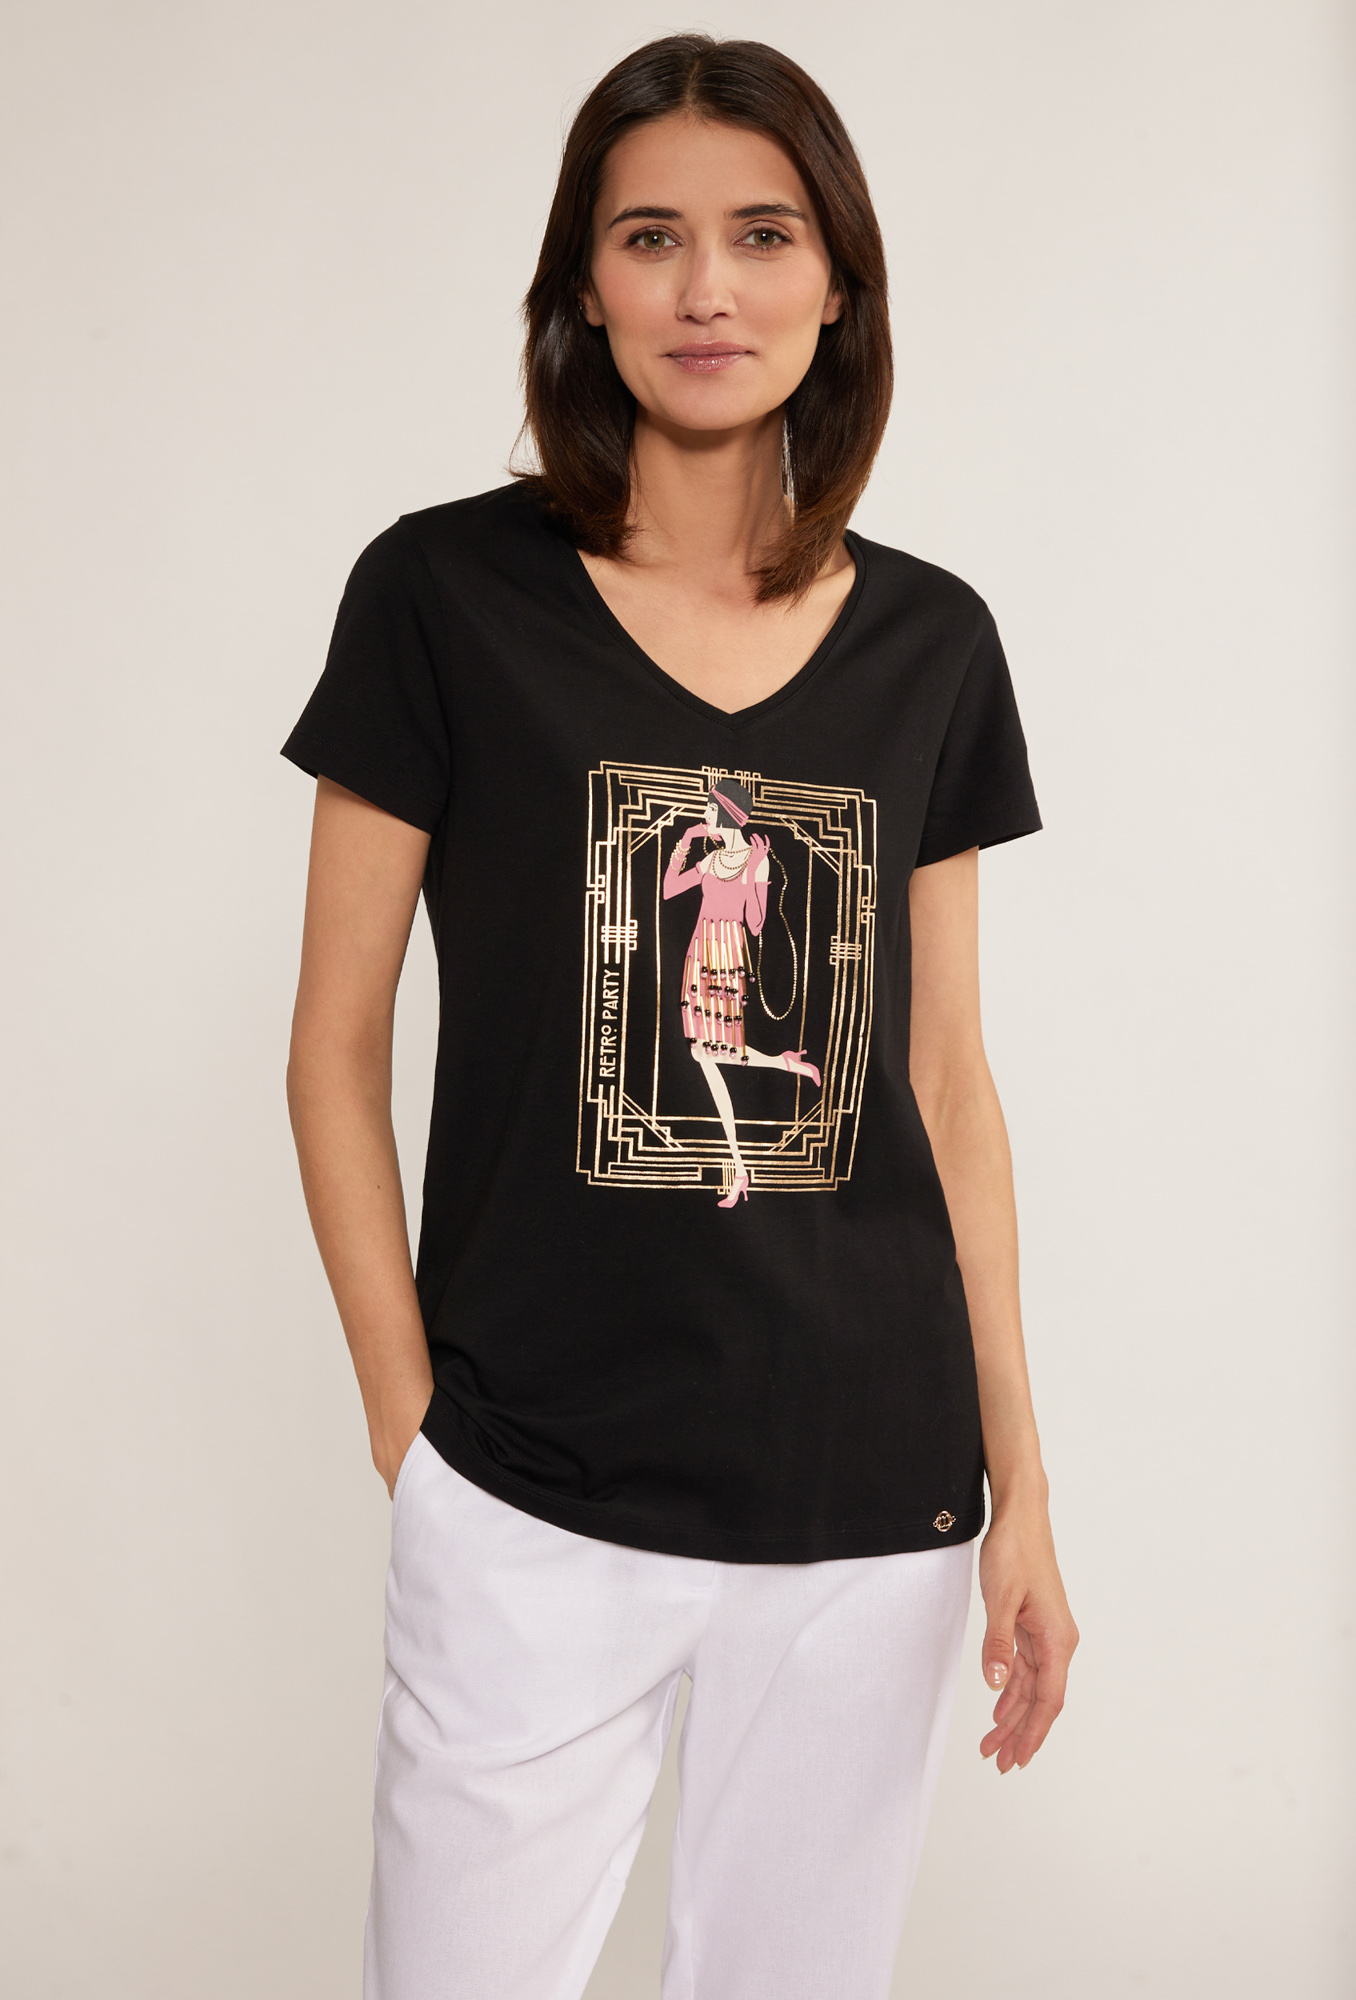 MONNARI Woman's T-Shirts Cotton T-Shirt With Application